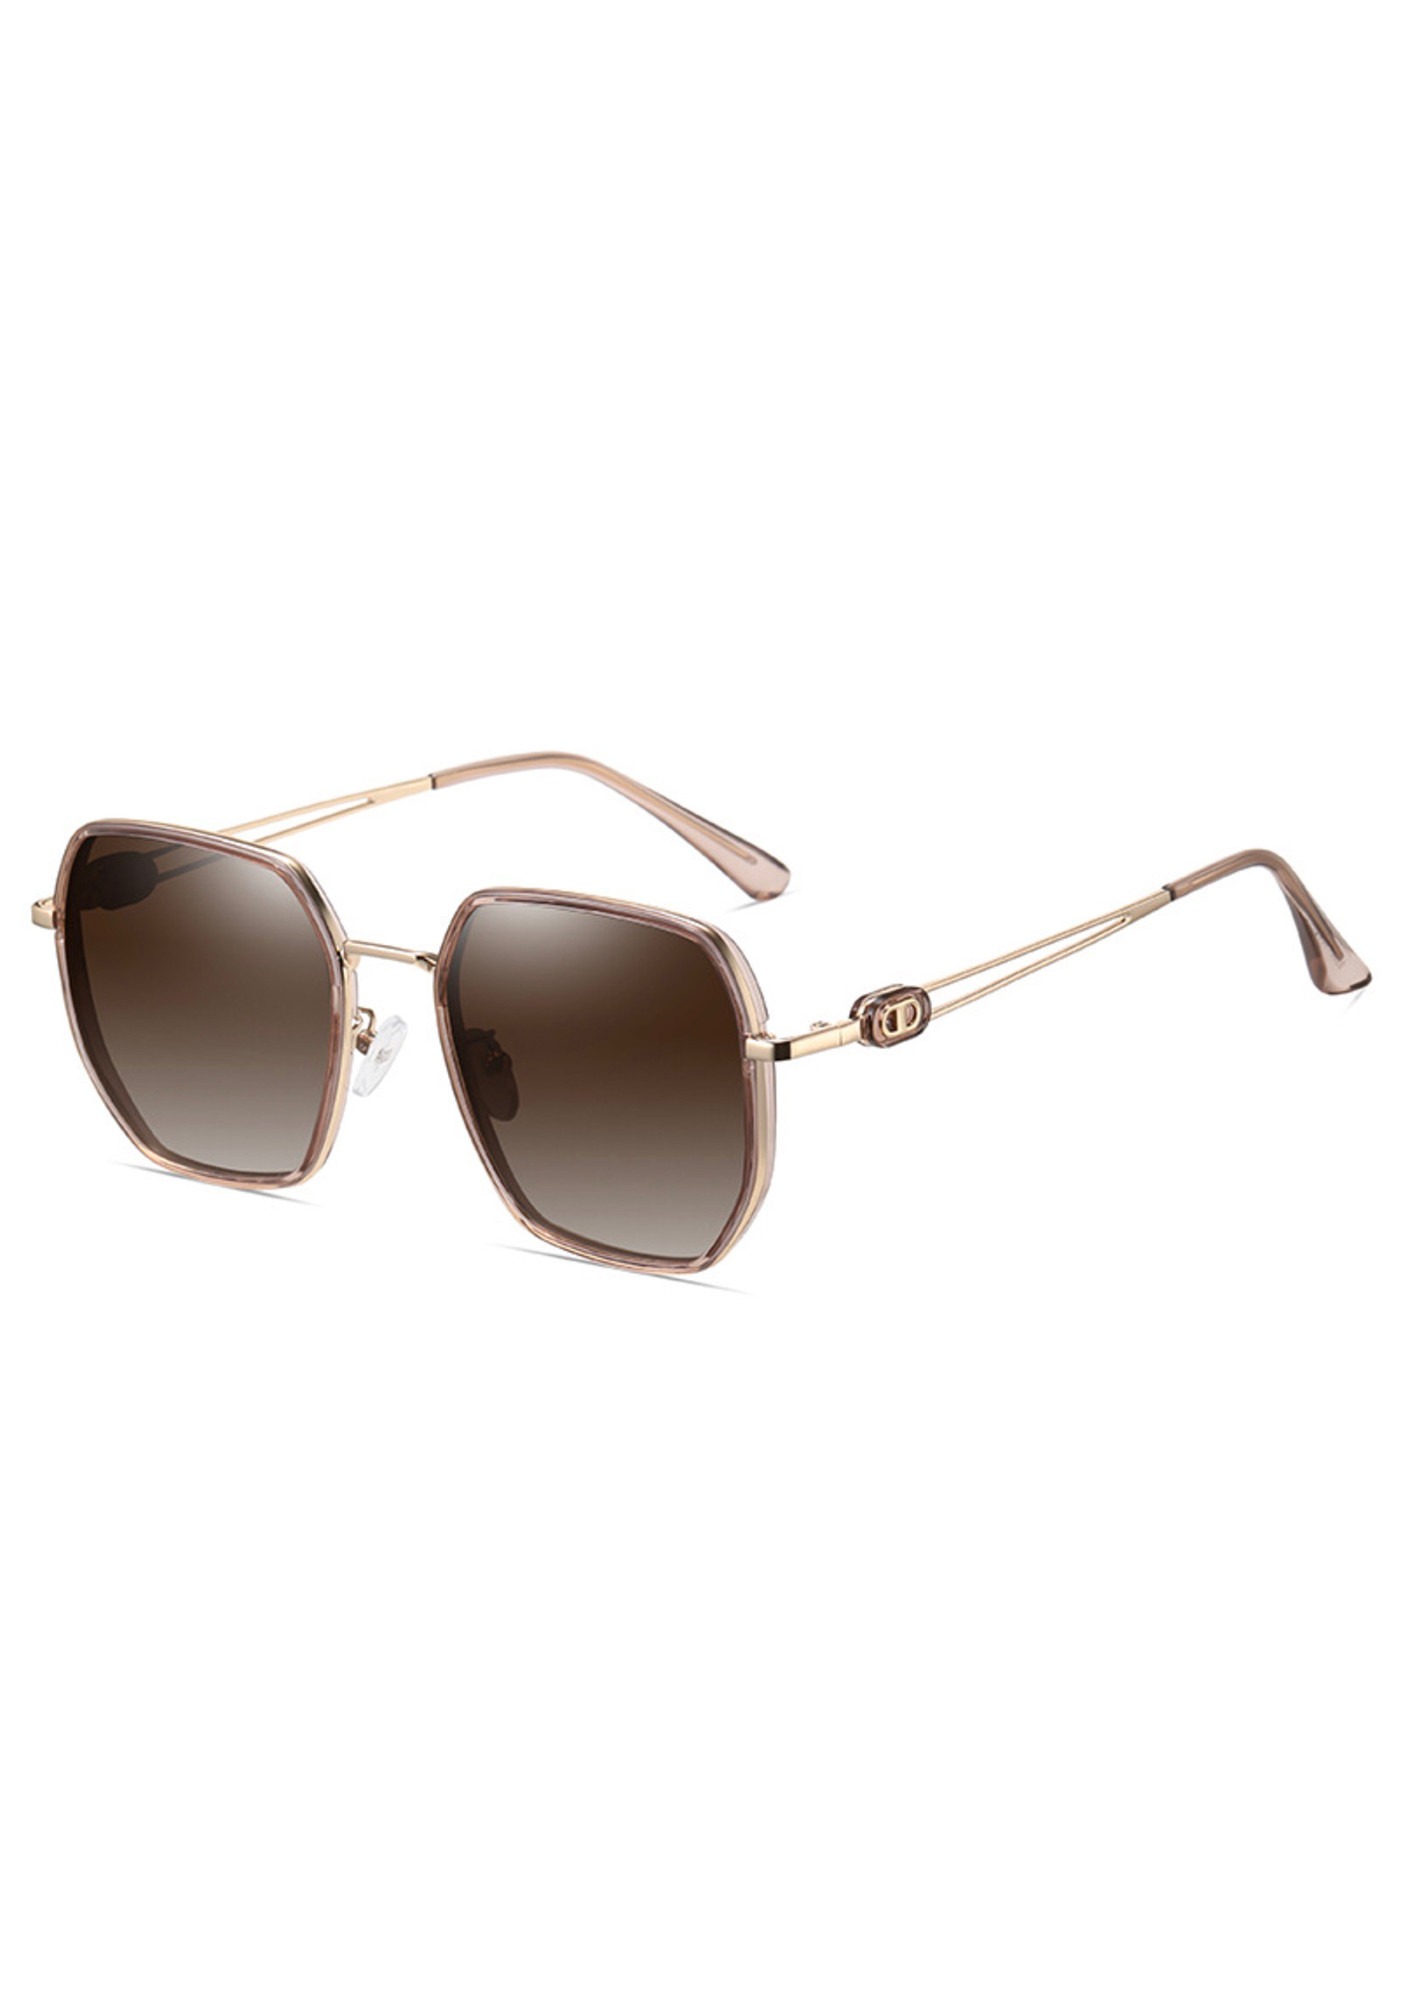 High quality Rectangle Sunglasses for Women Retro Driving Glasses 90's  Vintage Fashion Narrow Square Frame UV400